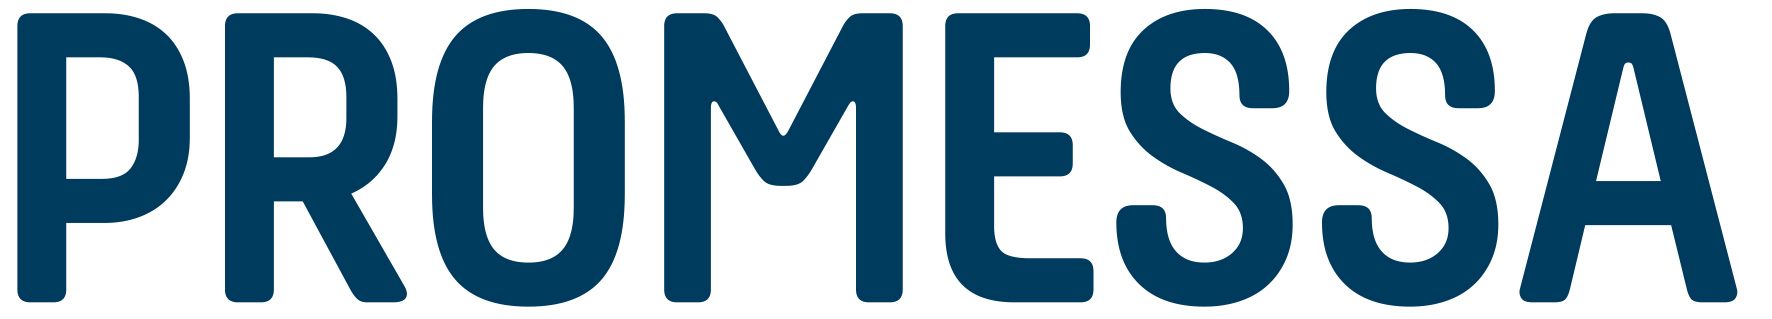 Promessa-logo(1).jpg